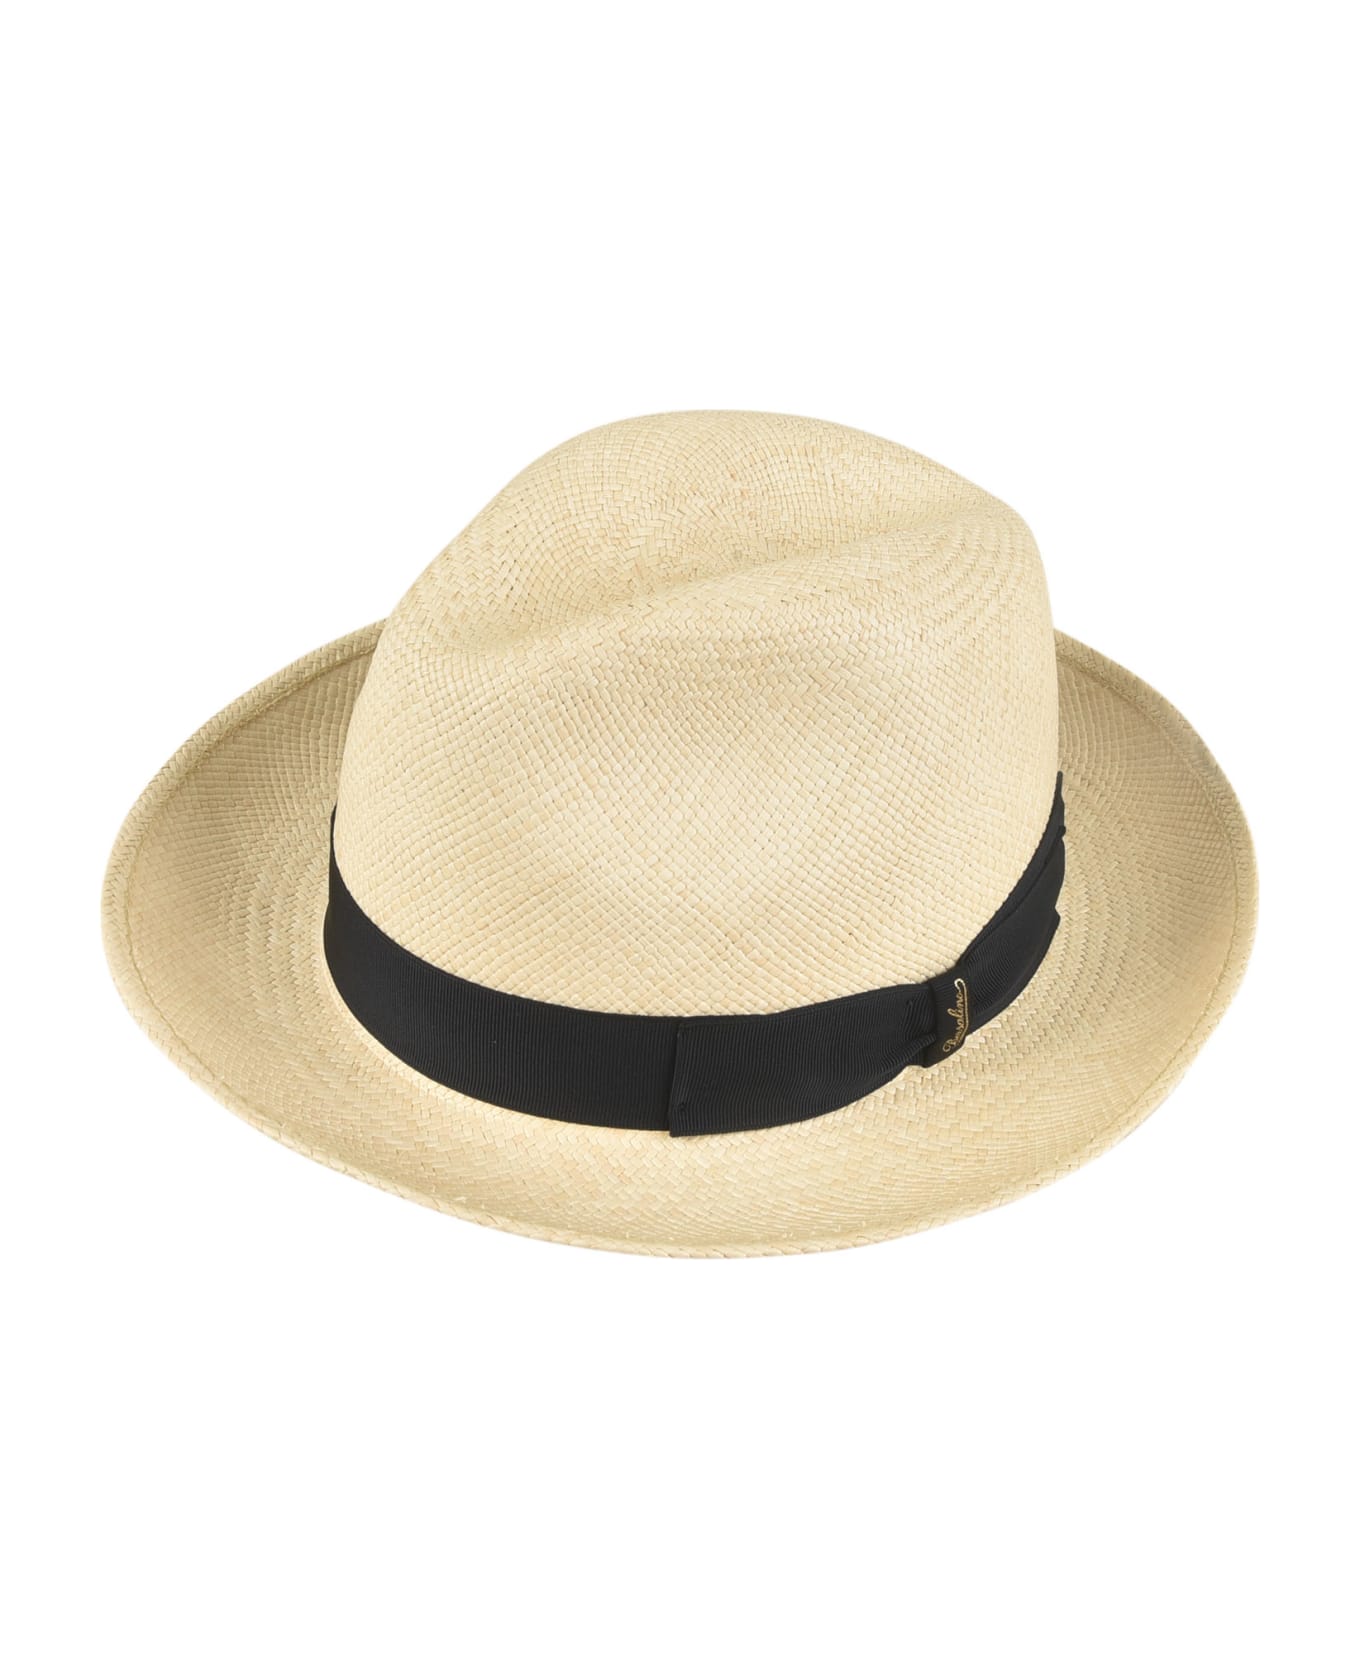 Borsalino Woven Round Hat - Natural